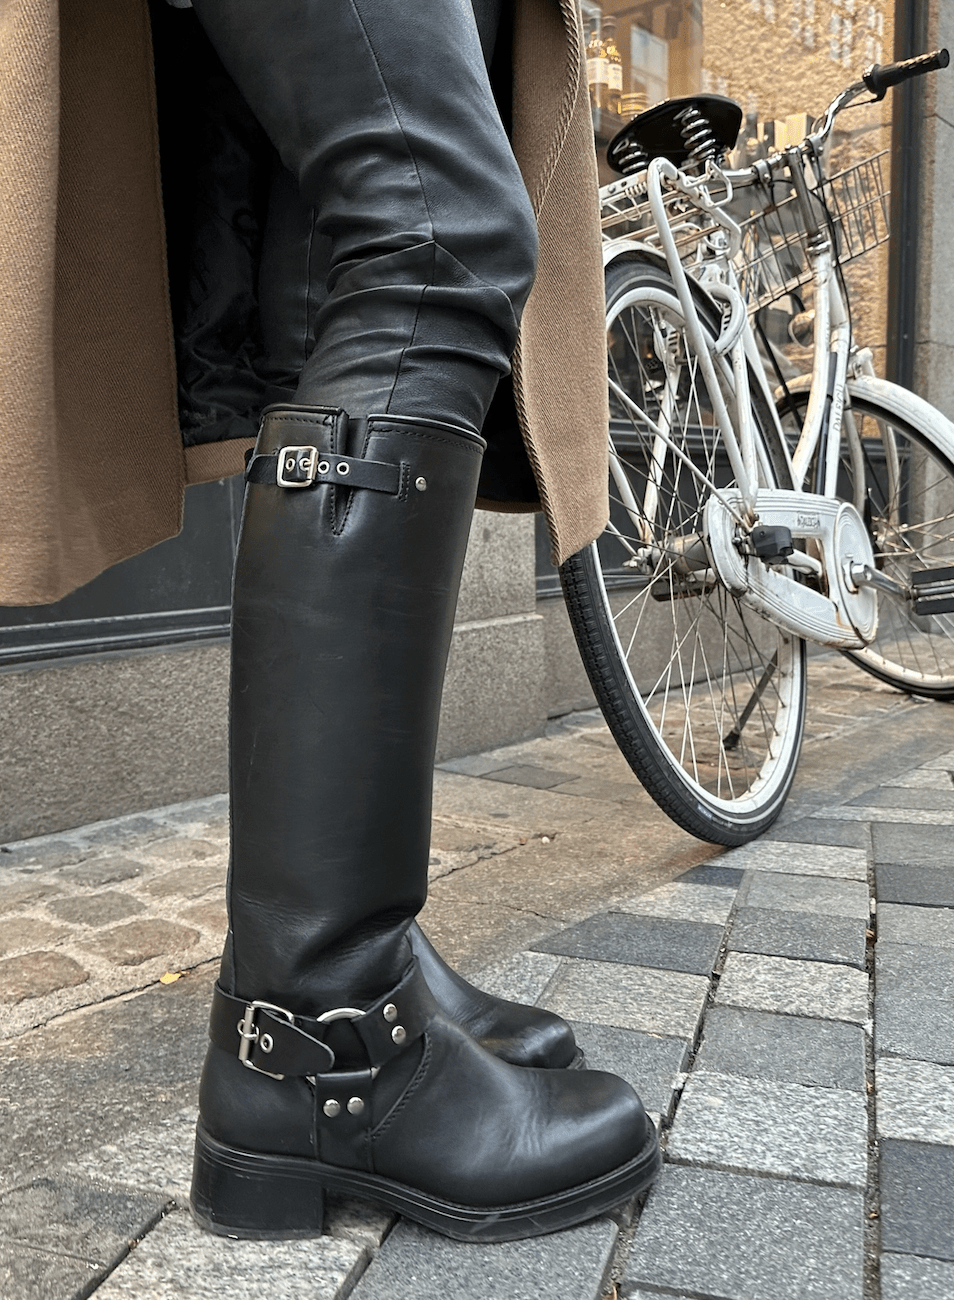 PHENUMB Sko Biker støvler - Sort læder - Pavement Tamera